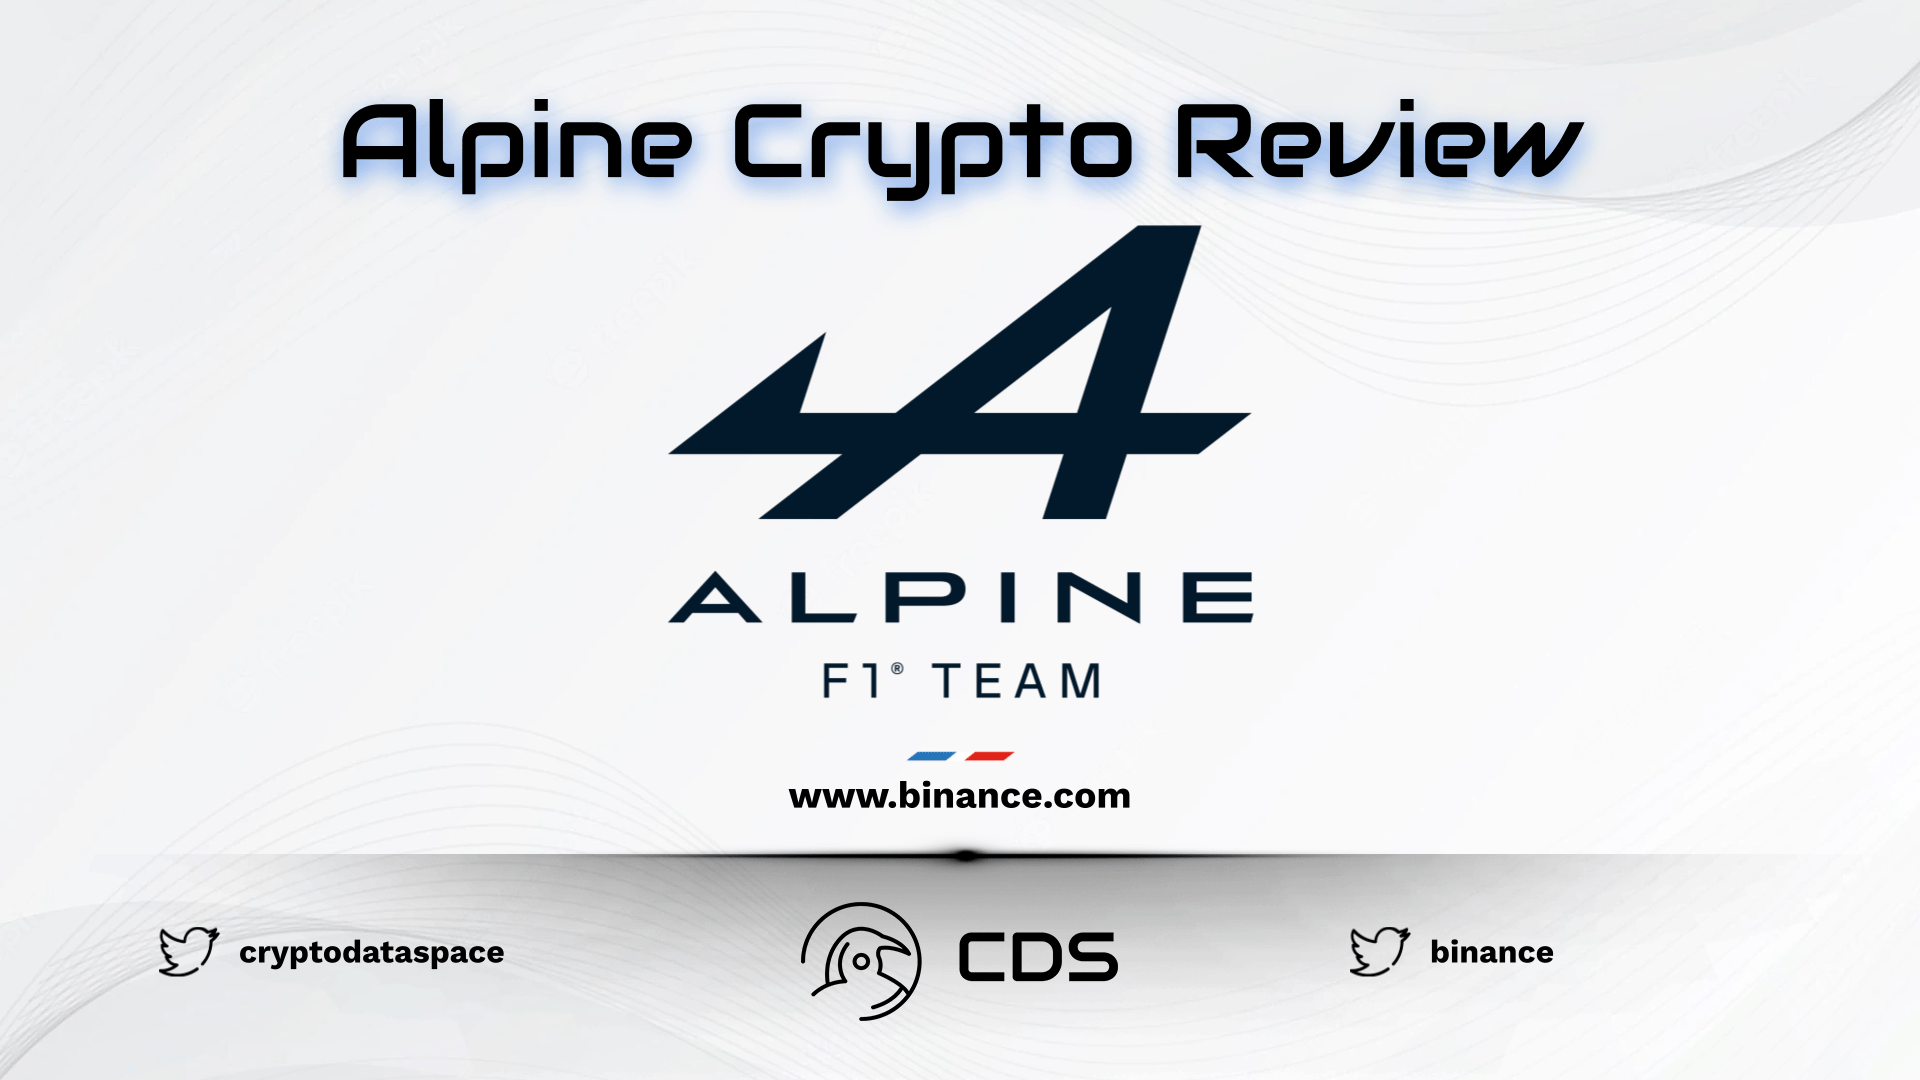 Alpine Crypto Review